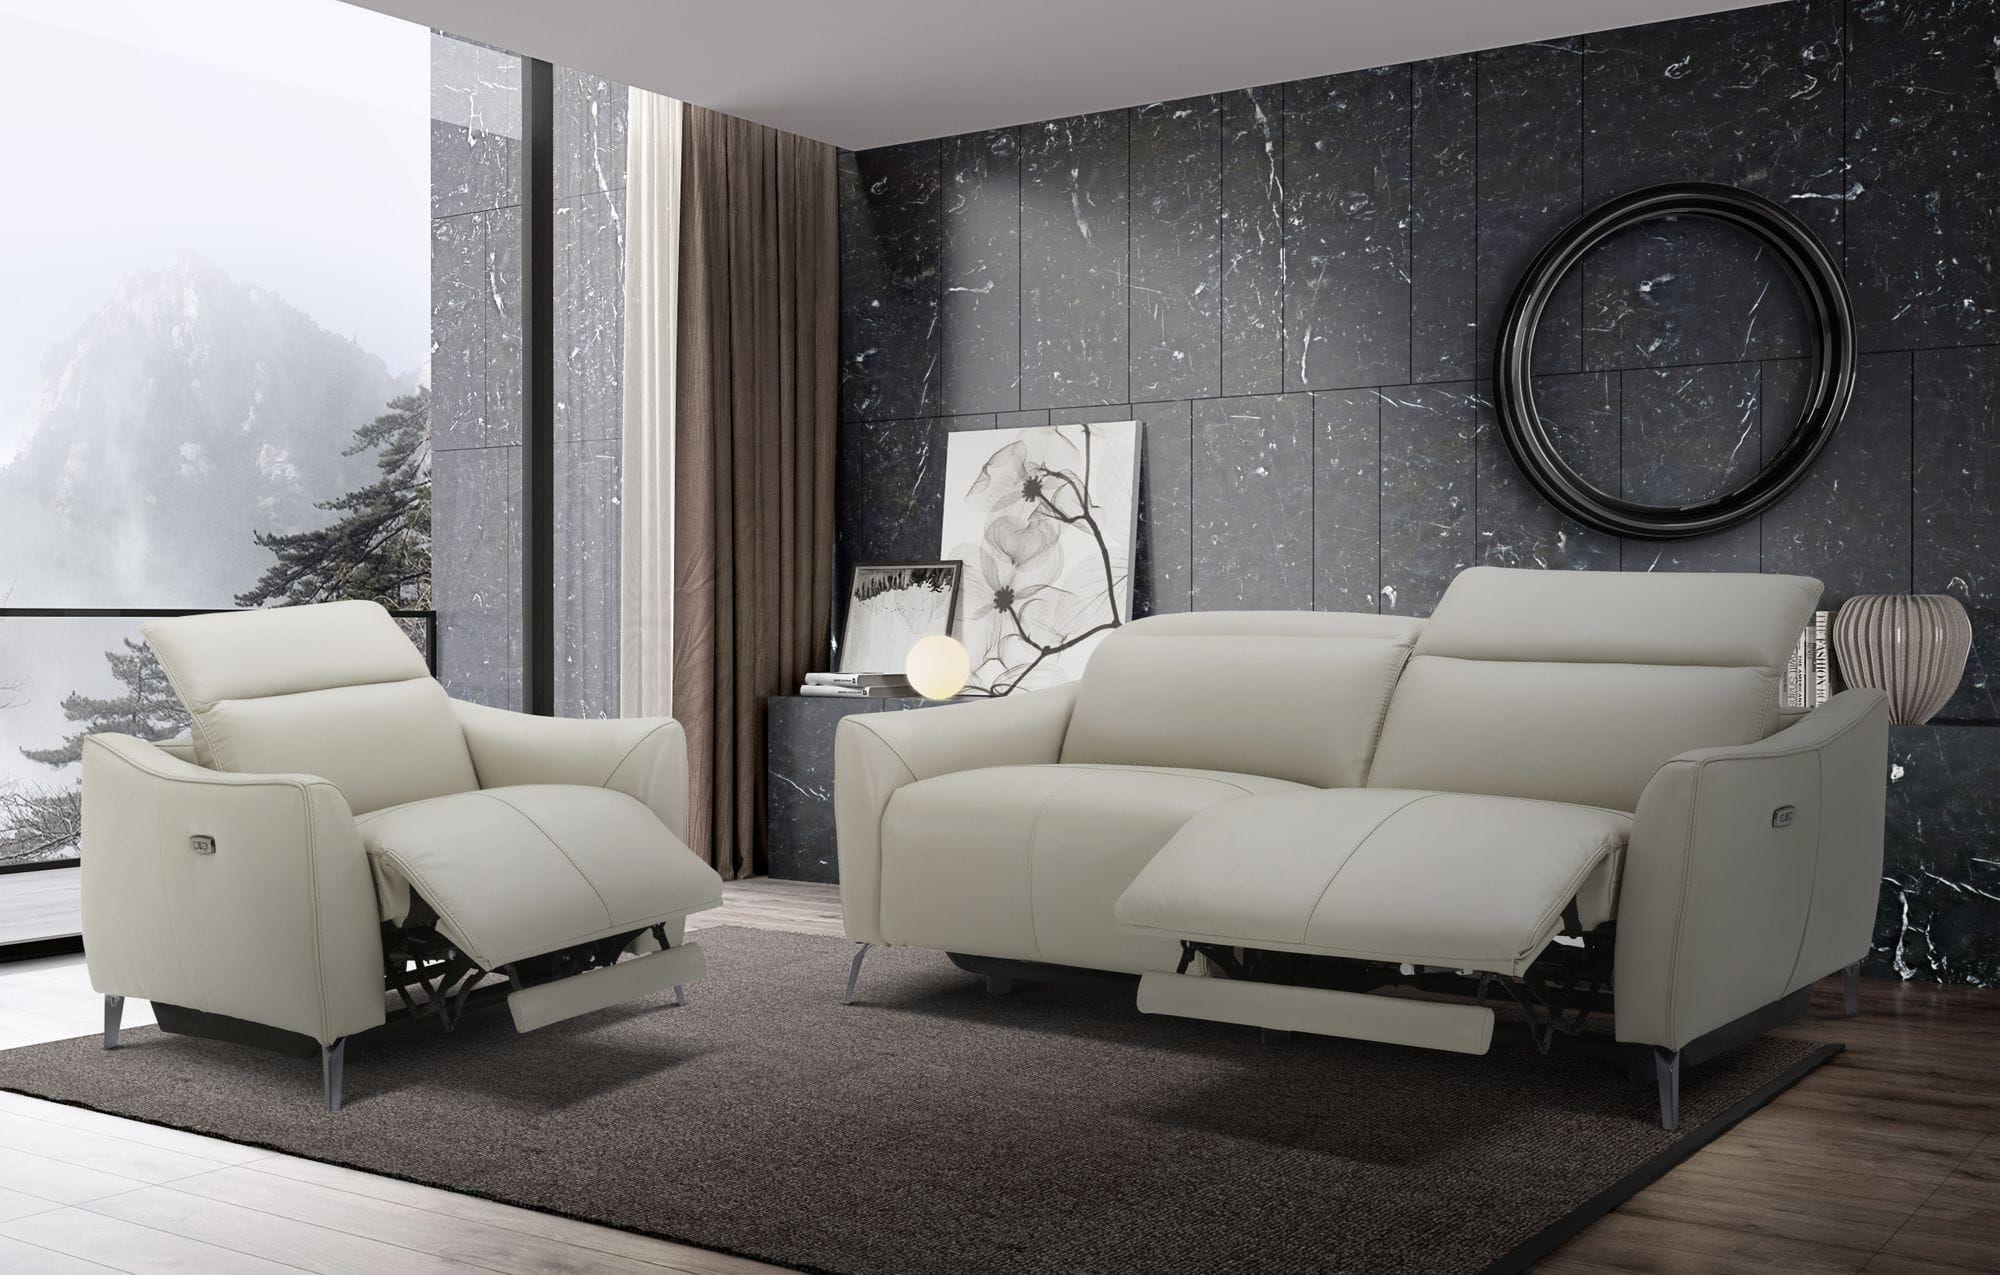 Contemporary, Modern Recliner Sofa Set VGKMKM.381H-DK-GRY-S-Set-2 VGKMKM.381H-DK-GRY-S-Set-2 in Light Grey Genuine Leather